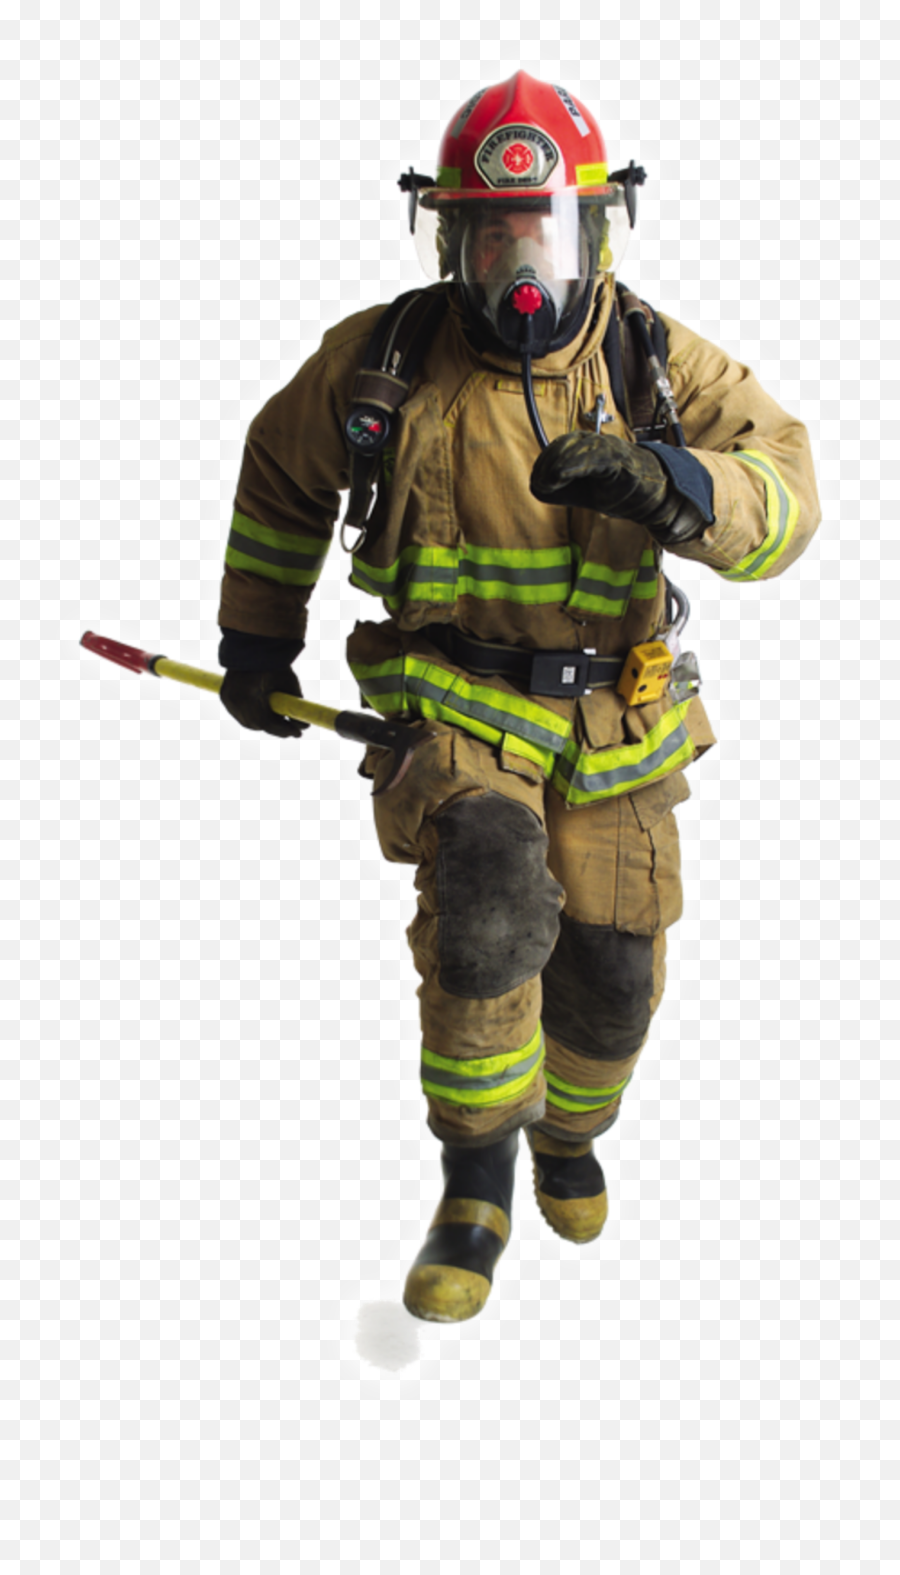 The Most Edited Firefighter Picsart Emoji,Firefighters Emojis